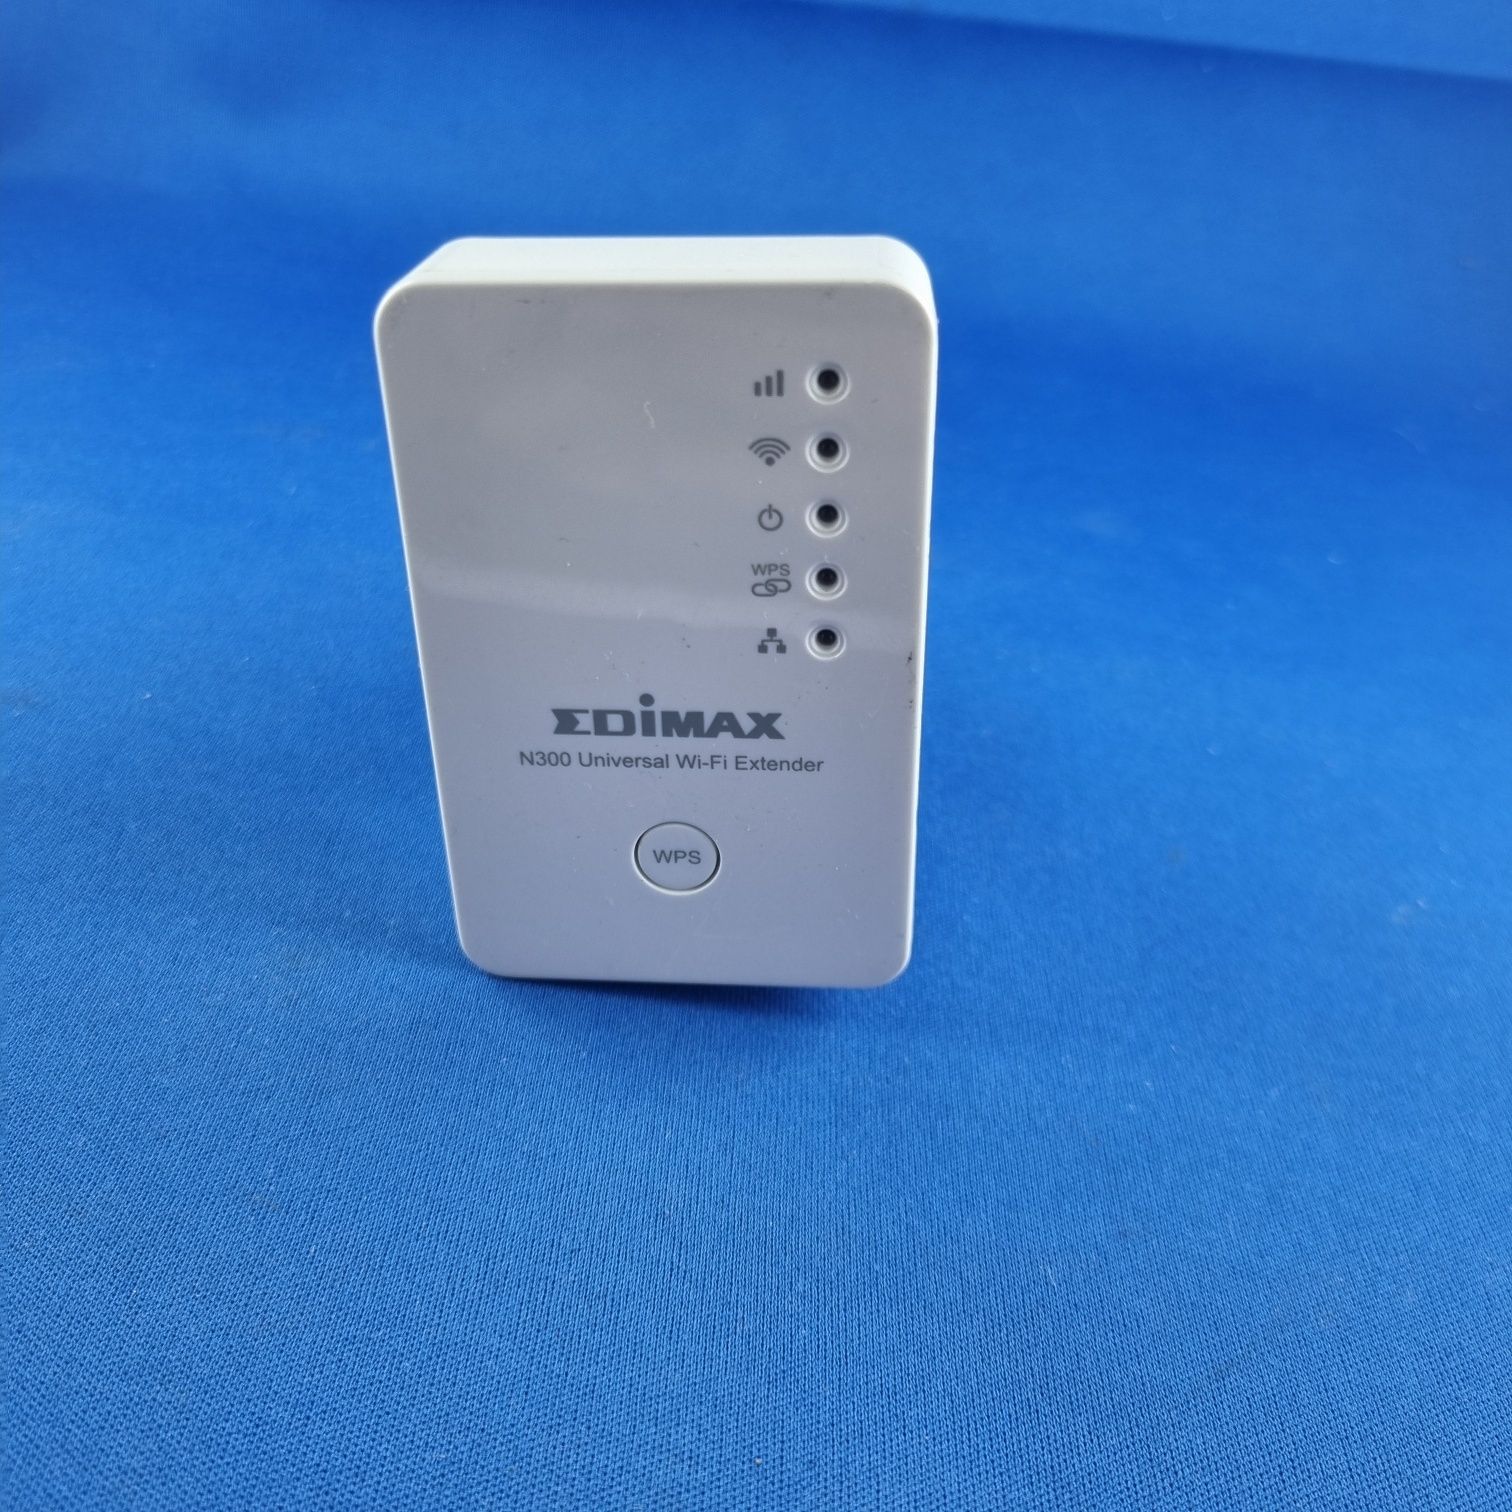 Edimax N300 Universal WiFi Extender